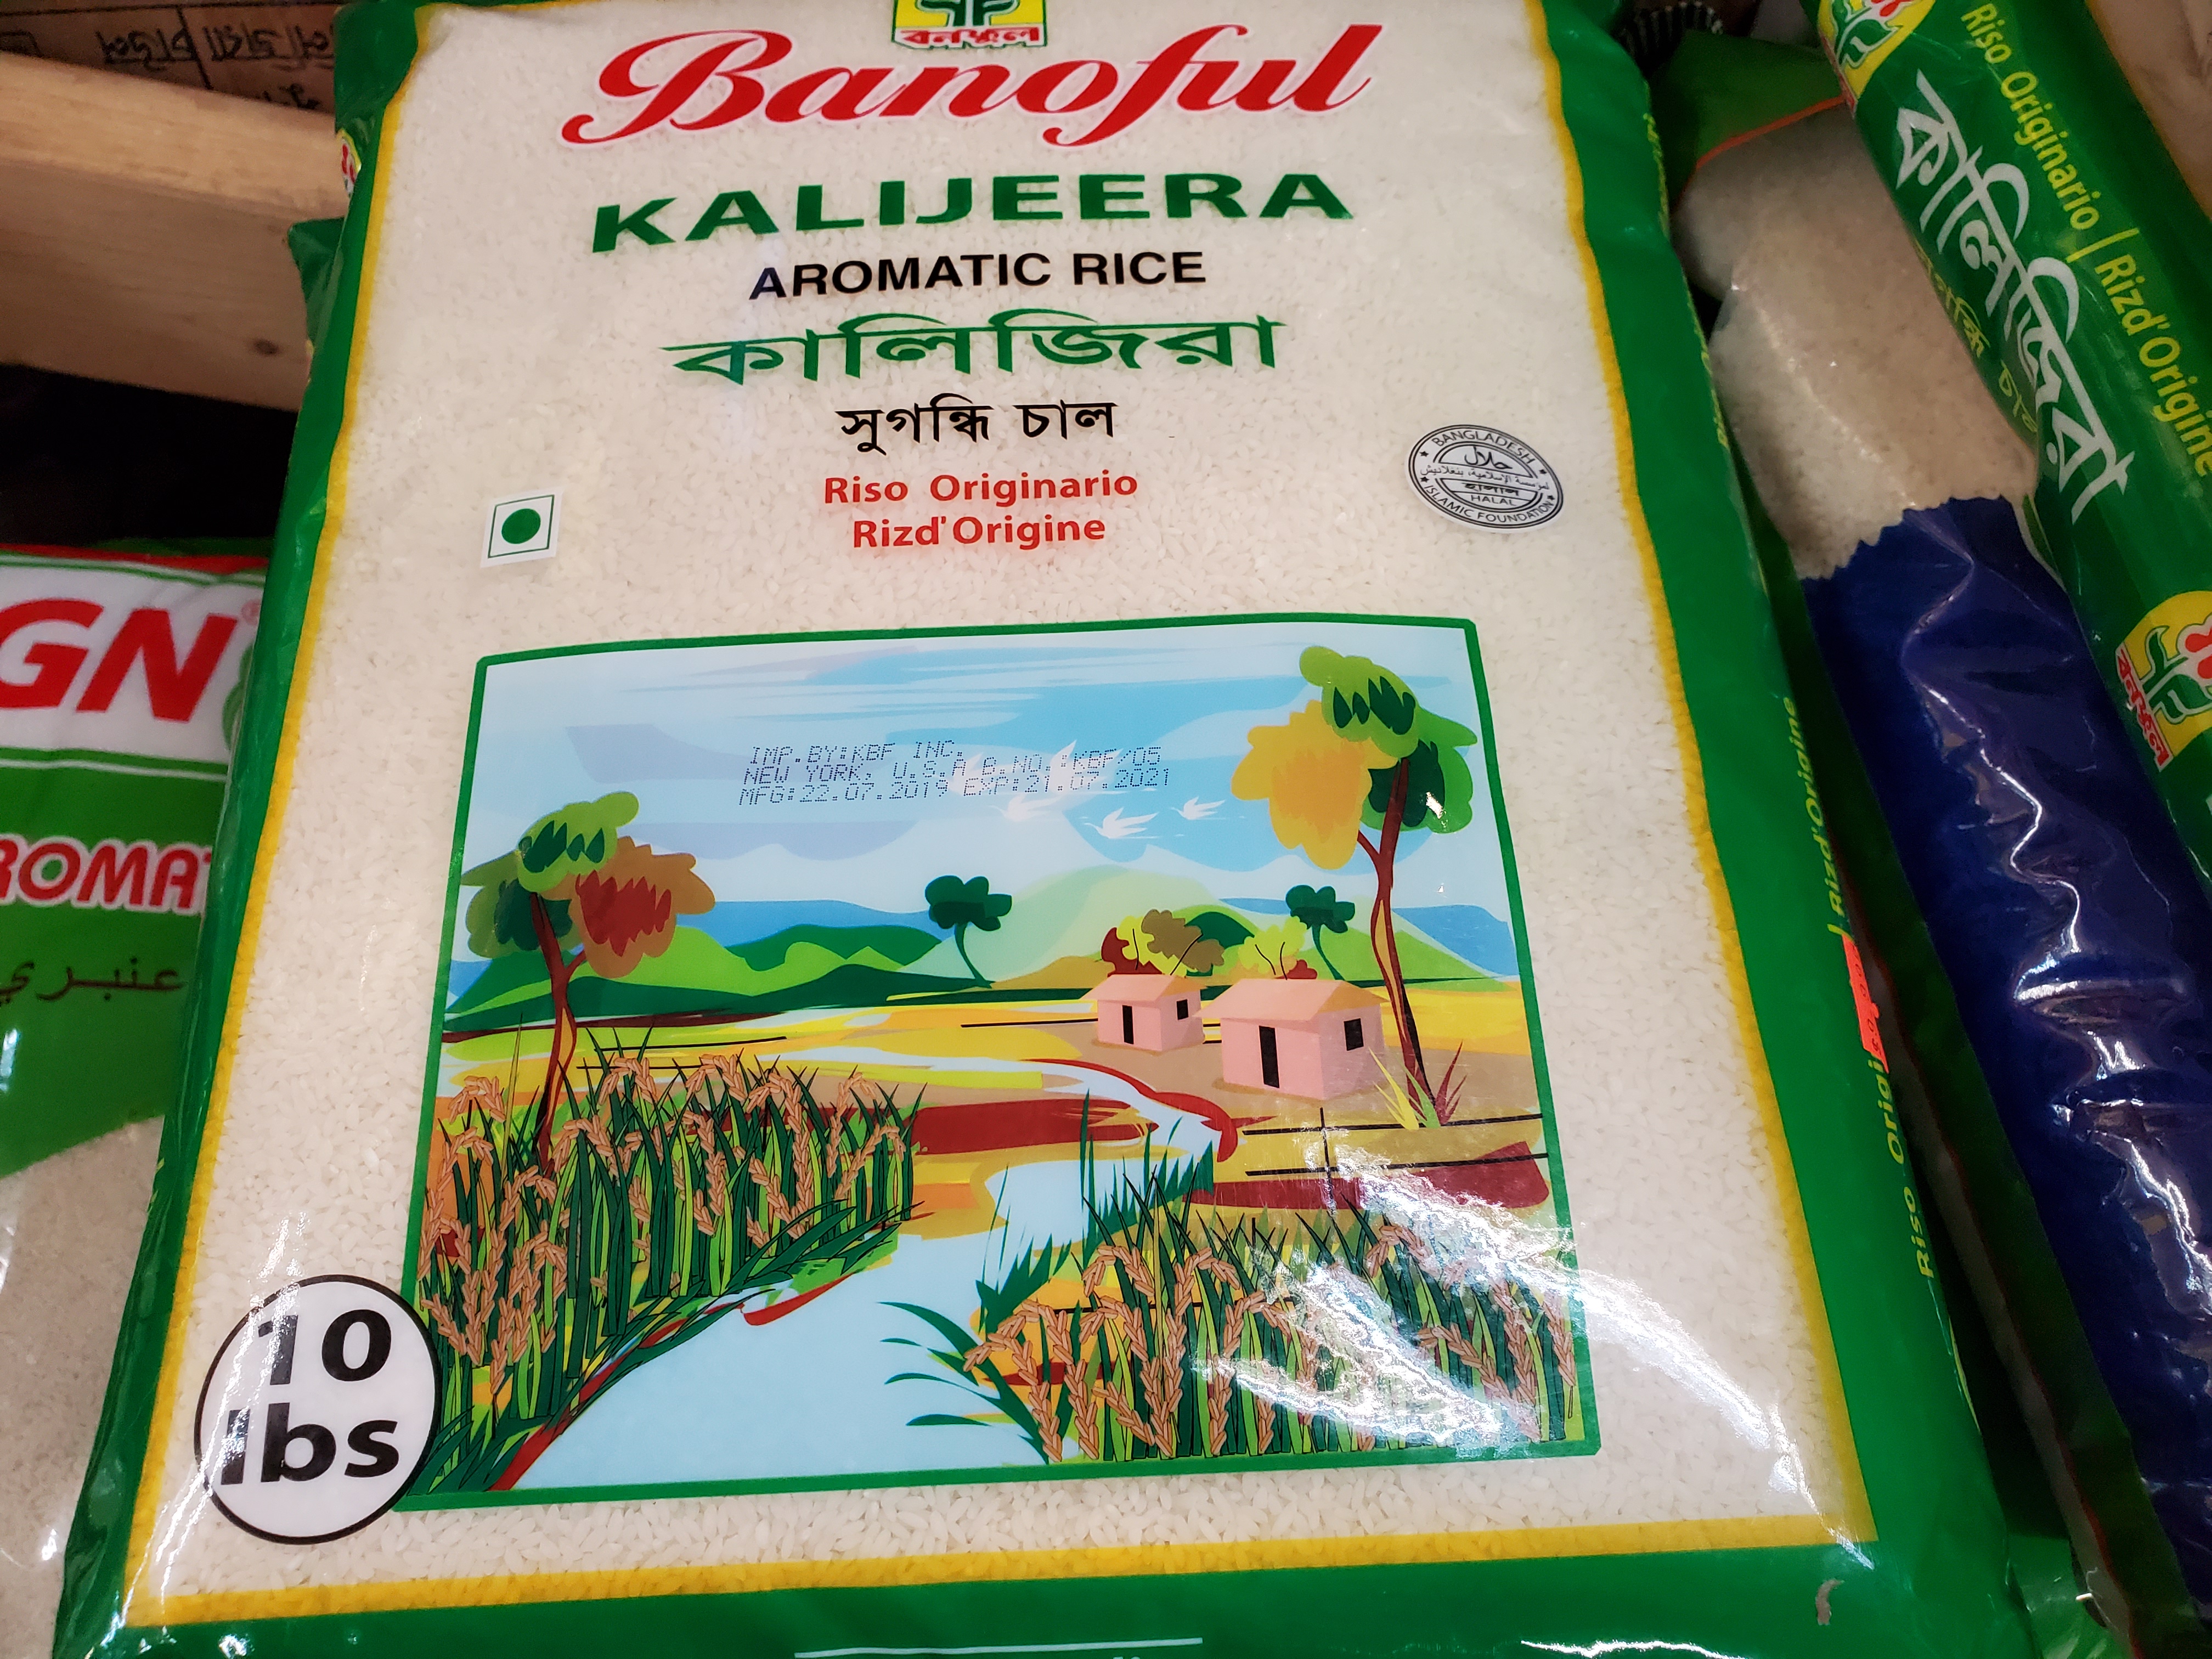 Kalijeera Aromatic rice 10lb